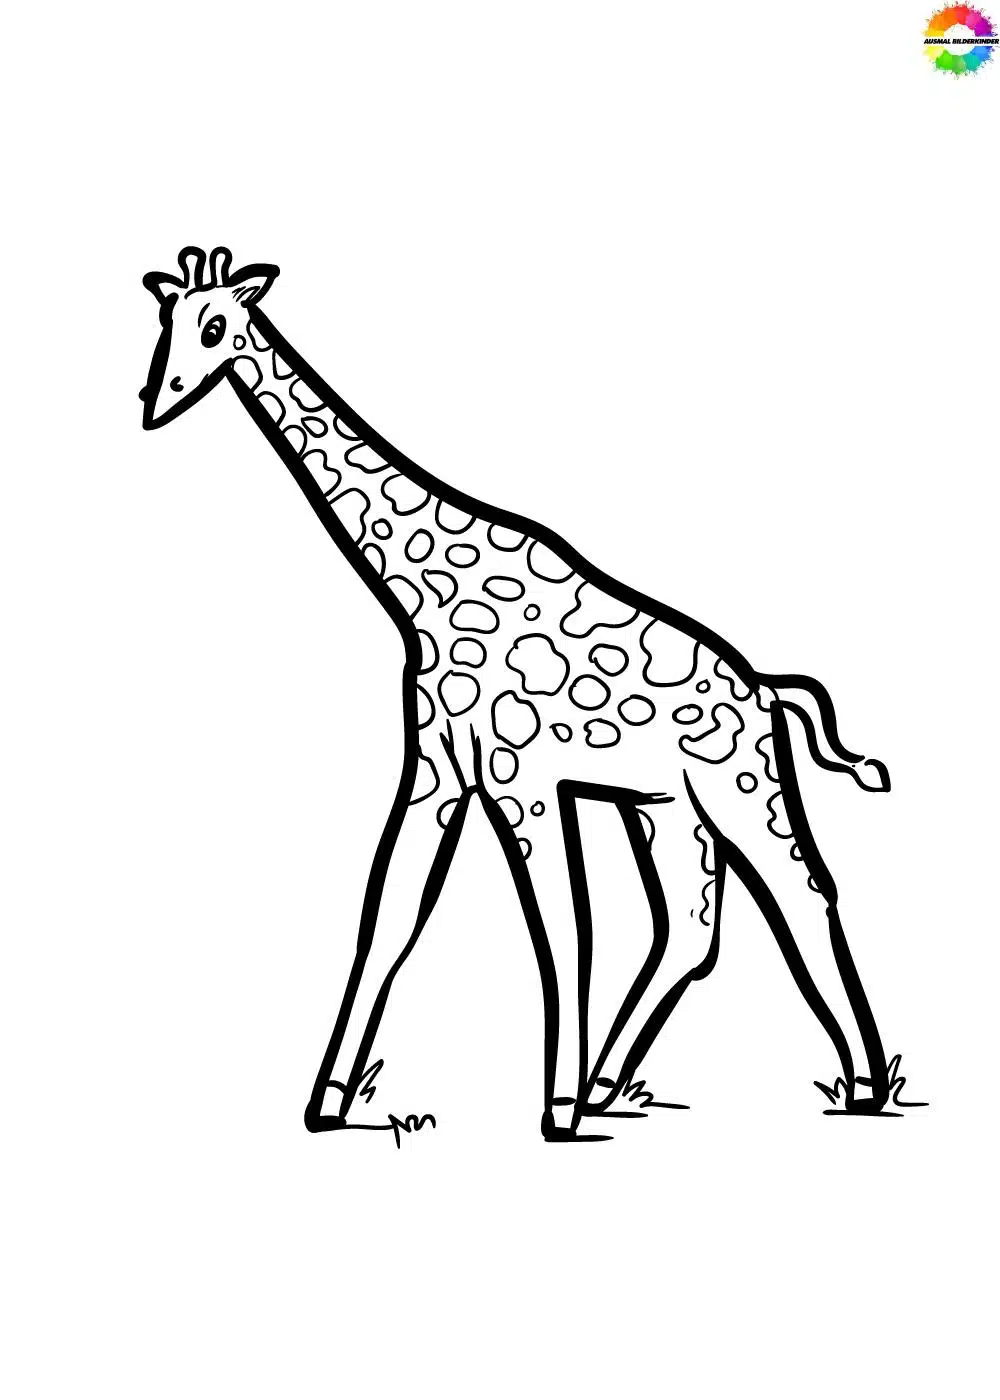 Giraffe 21